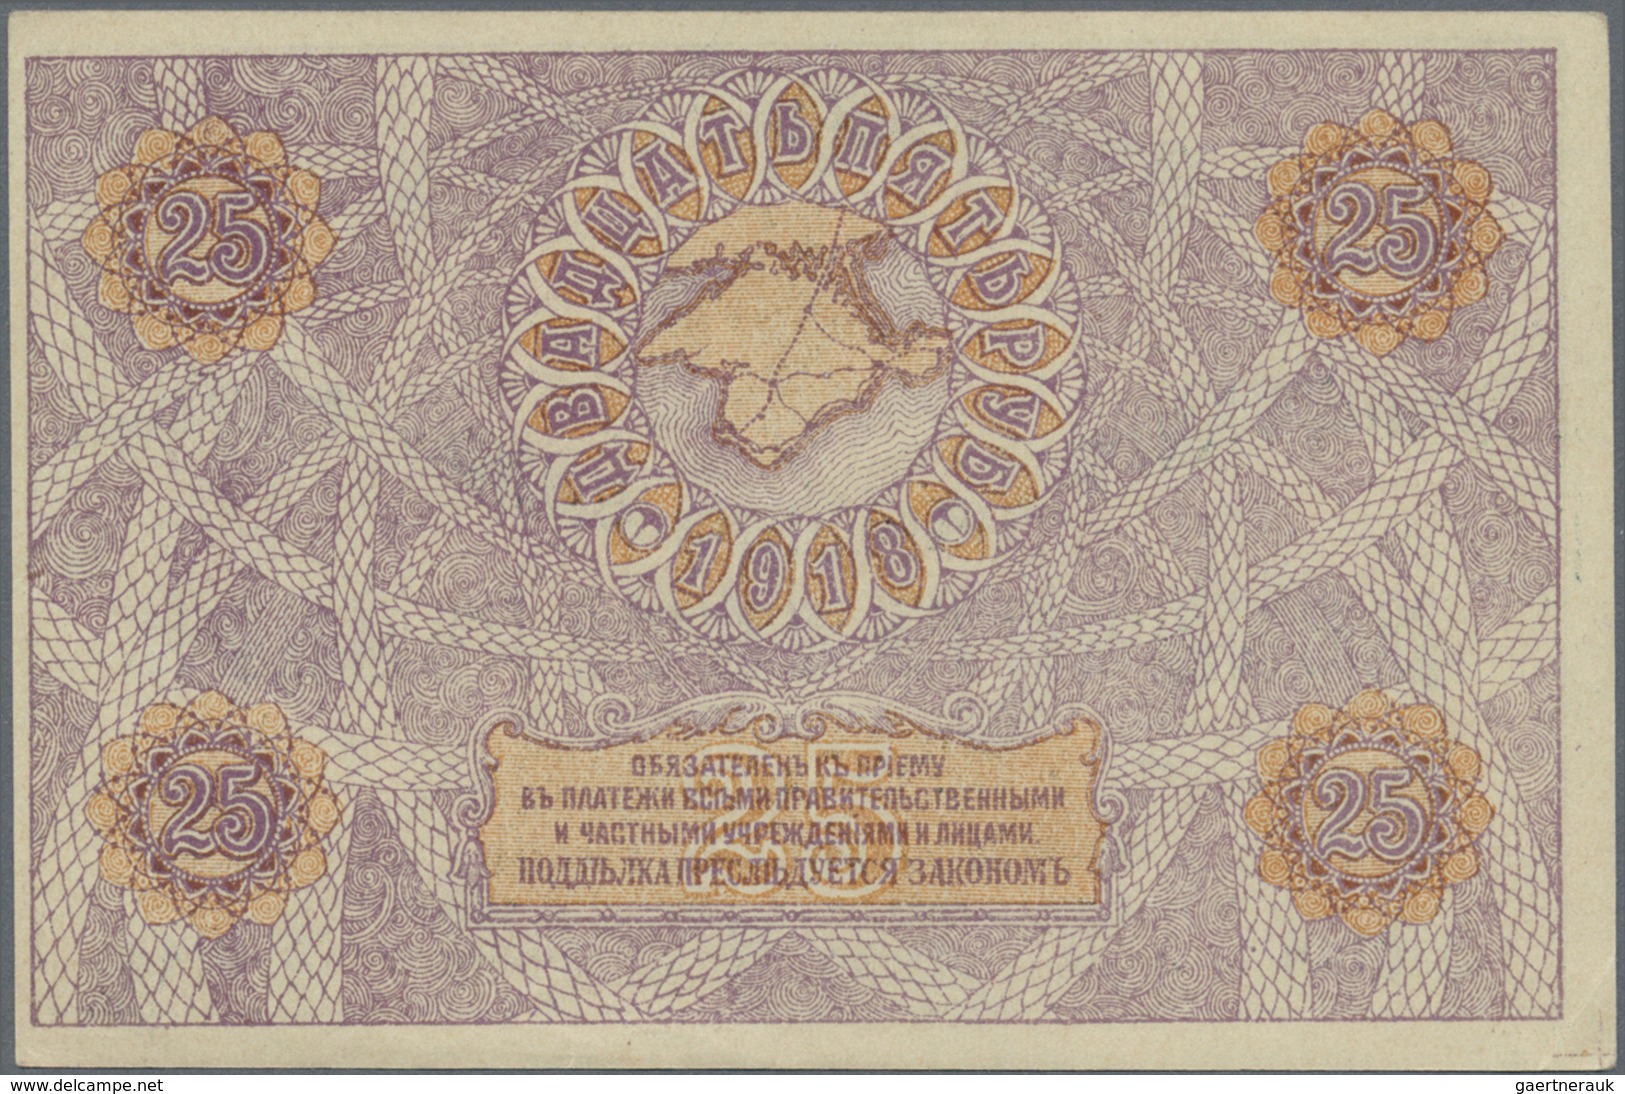 Ukraina / Ukraine: 25 Rubles 1918 P. S372b, One Cornerfold, Otherwise Perfect, Condition: AUNC. - Ukraine